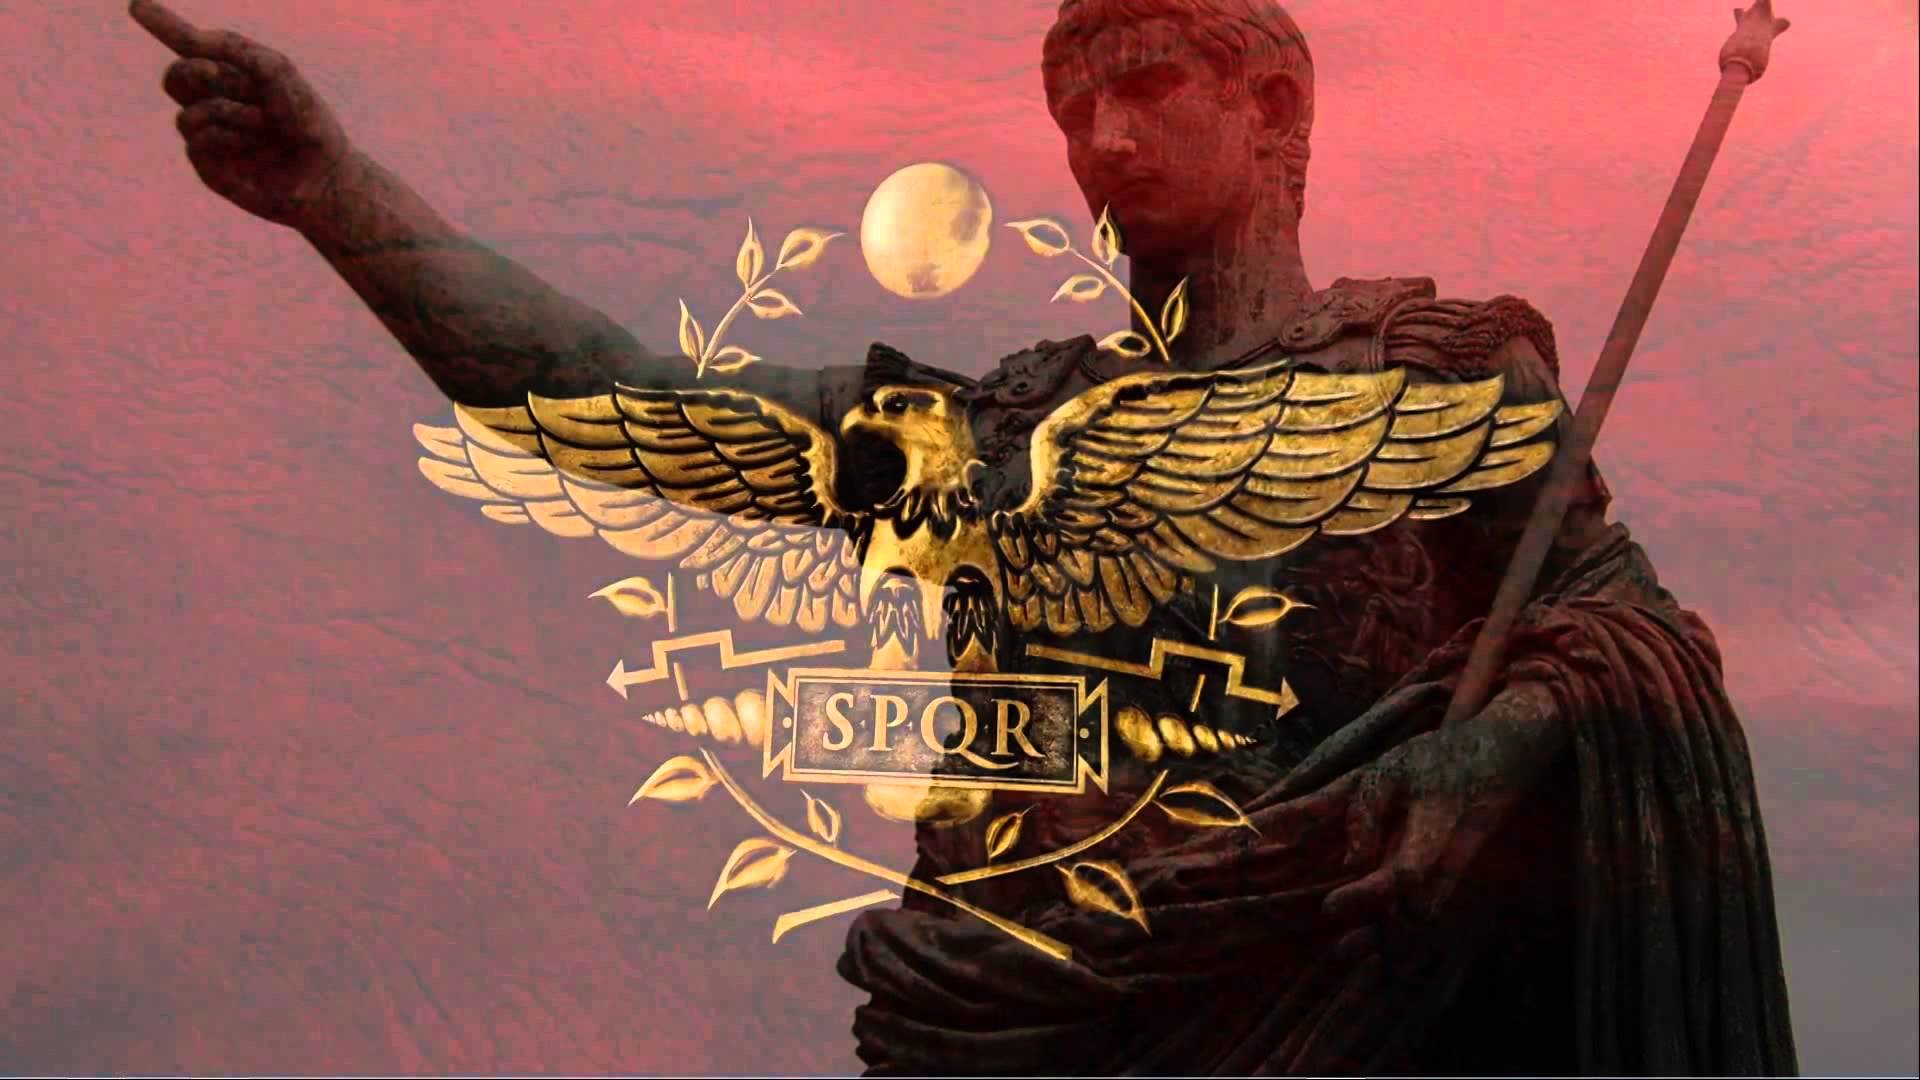 Roman anthem(SPQR) - YouTube